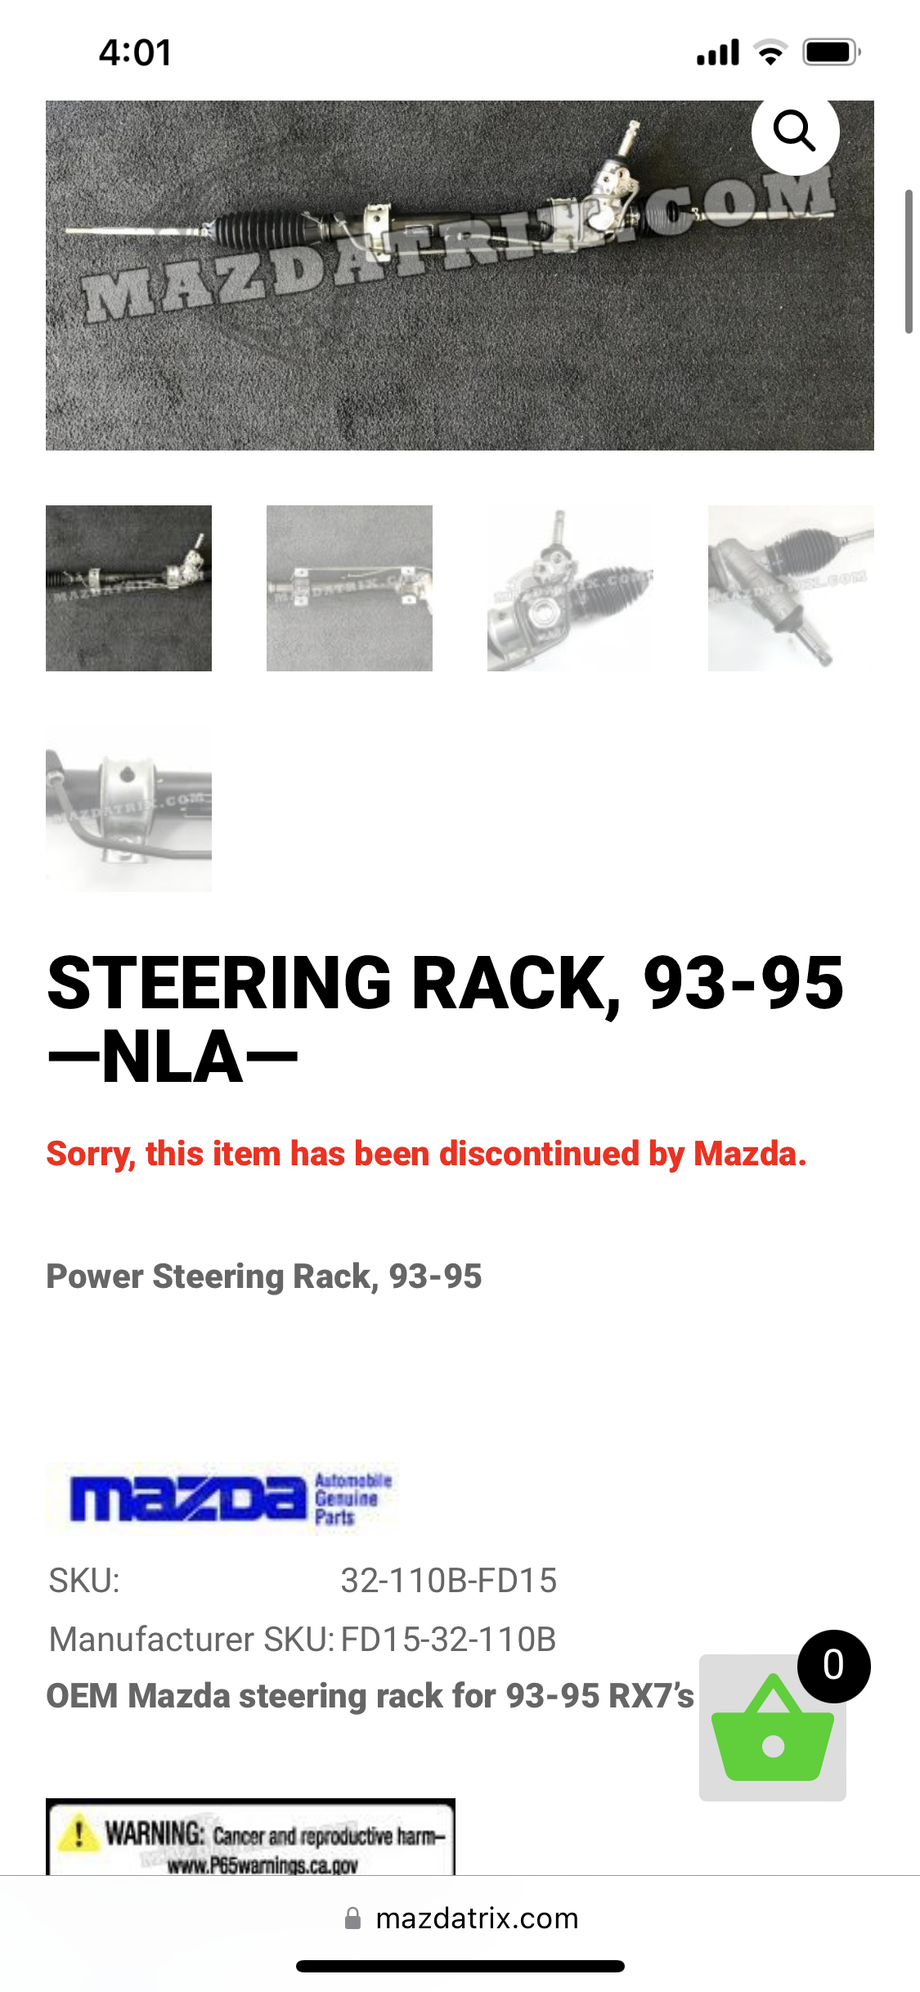 Steering/Suspension - 93-95 FD power steering rack - Used - 1993 to 1995 Mazda RX-7 - San Diego, CA 91941, United States